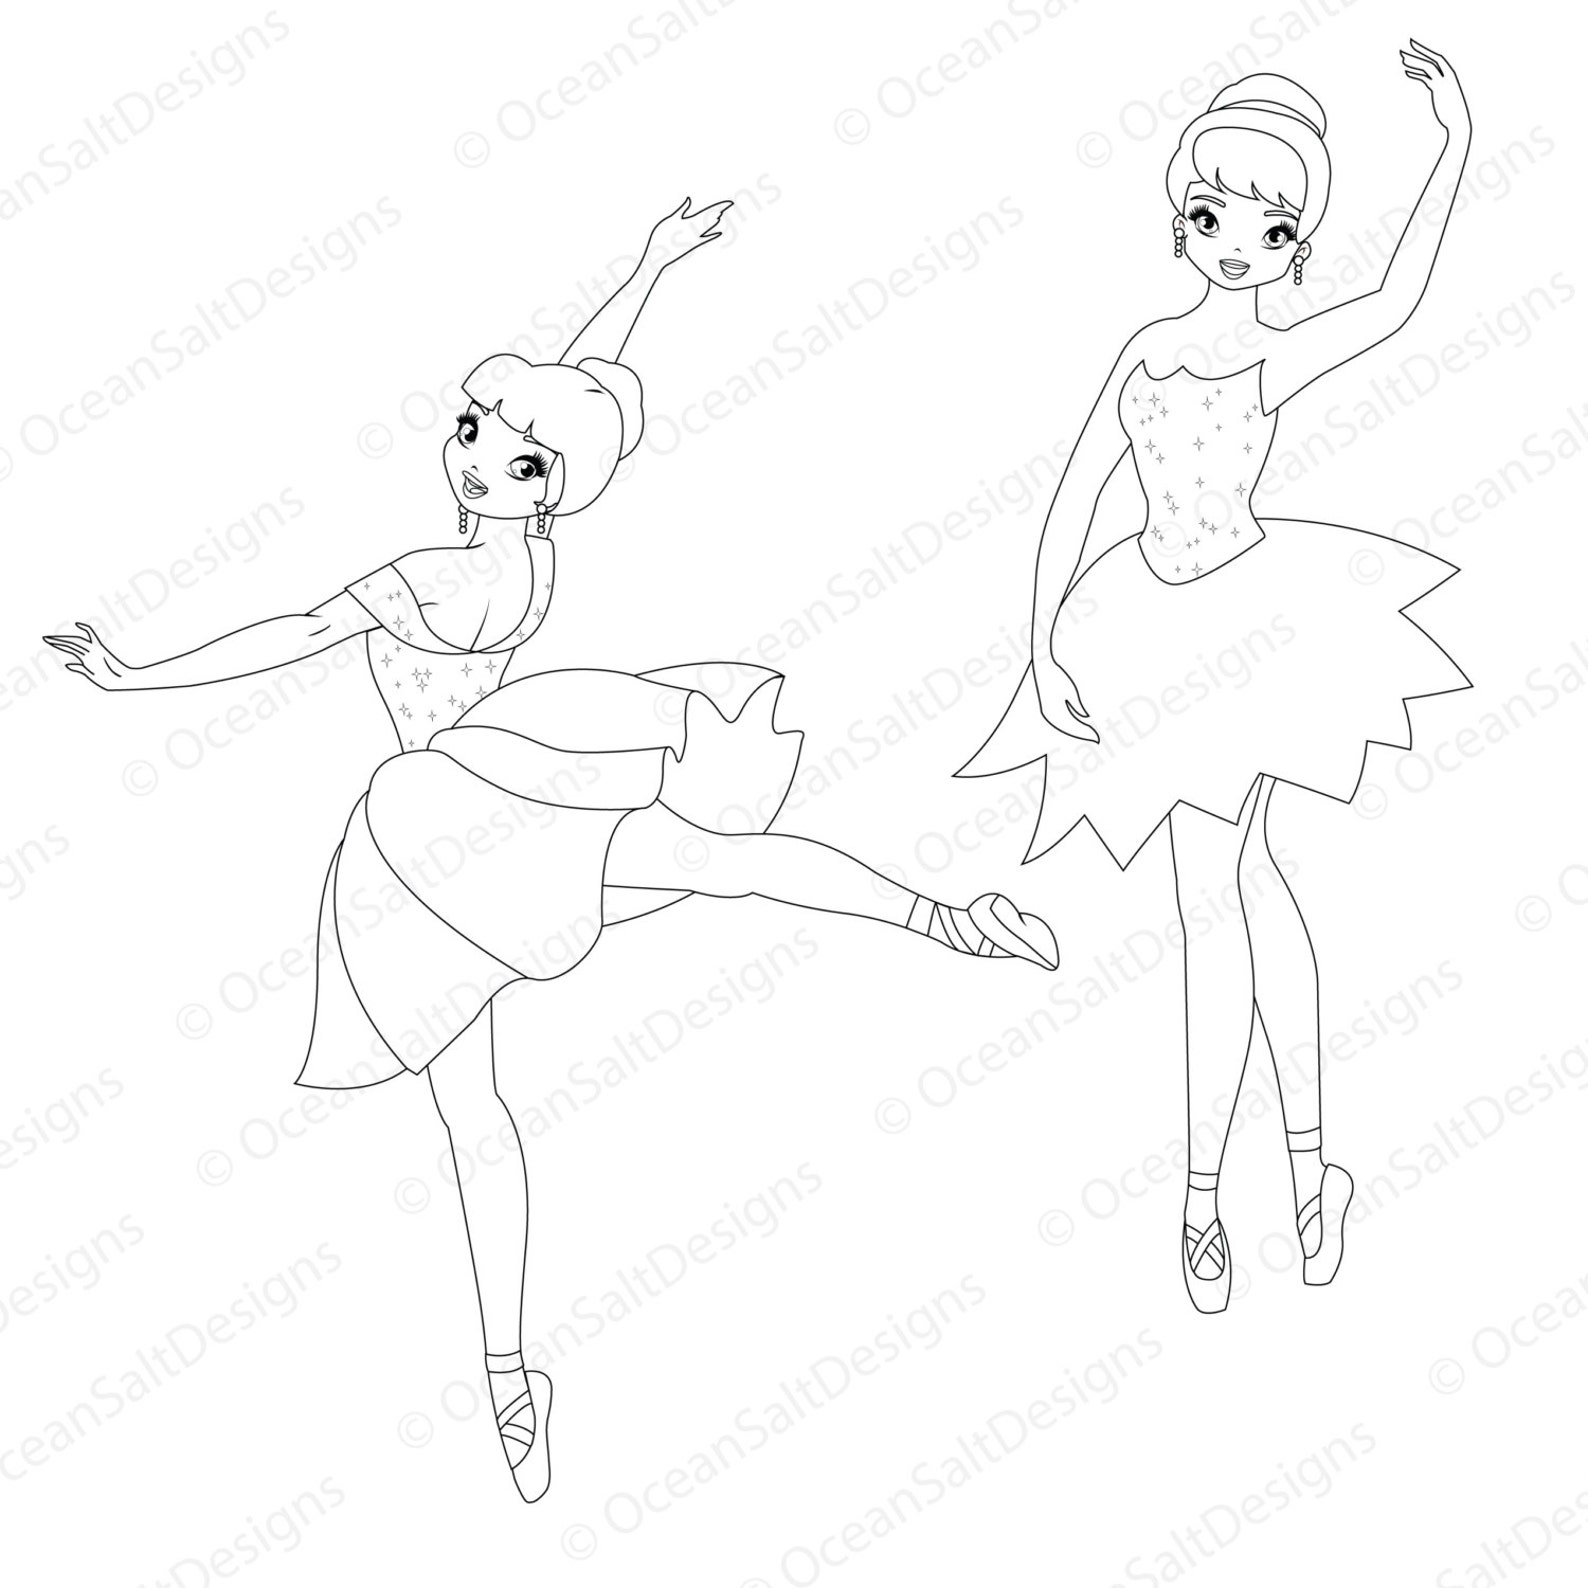 ballerina party clipart digital stamp ballet clipart digi stamp dancing image tutu ballet shoes ballerina invitation kids party